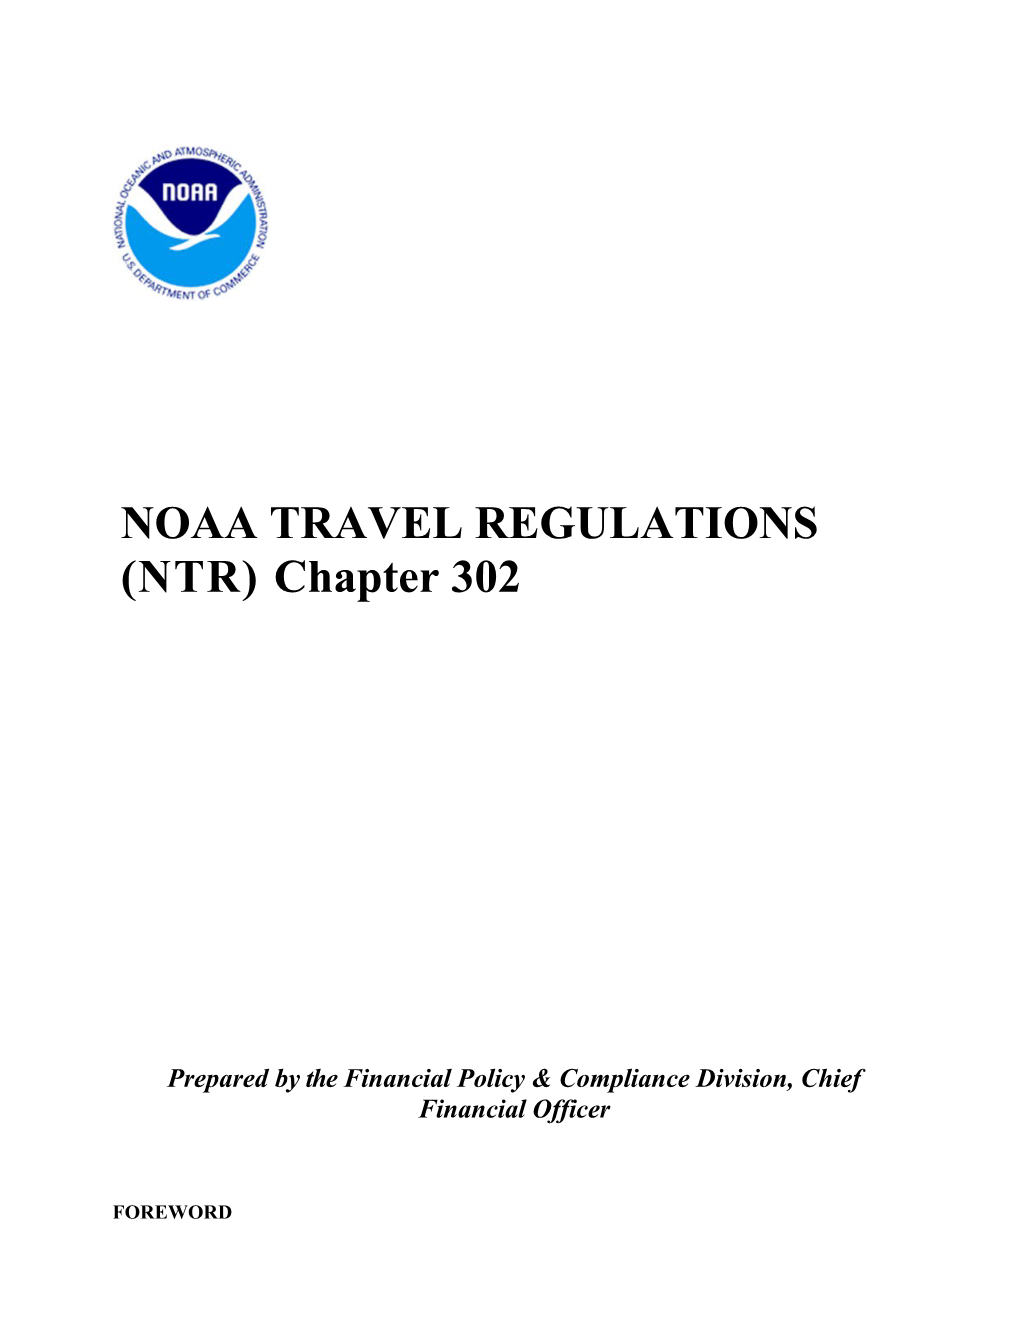 NOAA TRAVEL REGULATIONS (NTR) Chapter 302